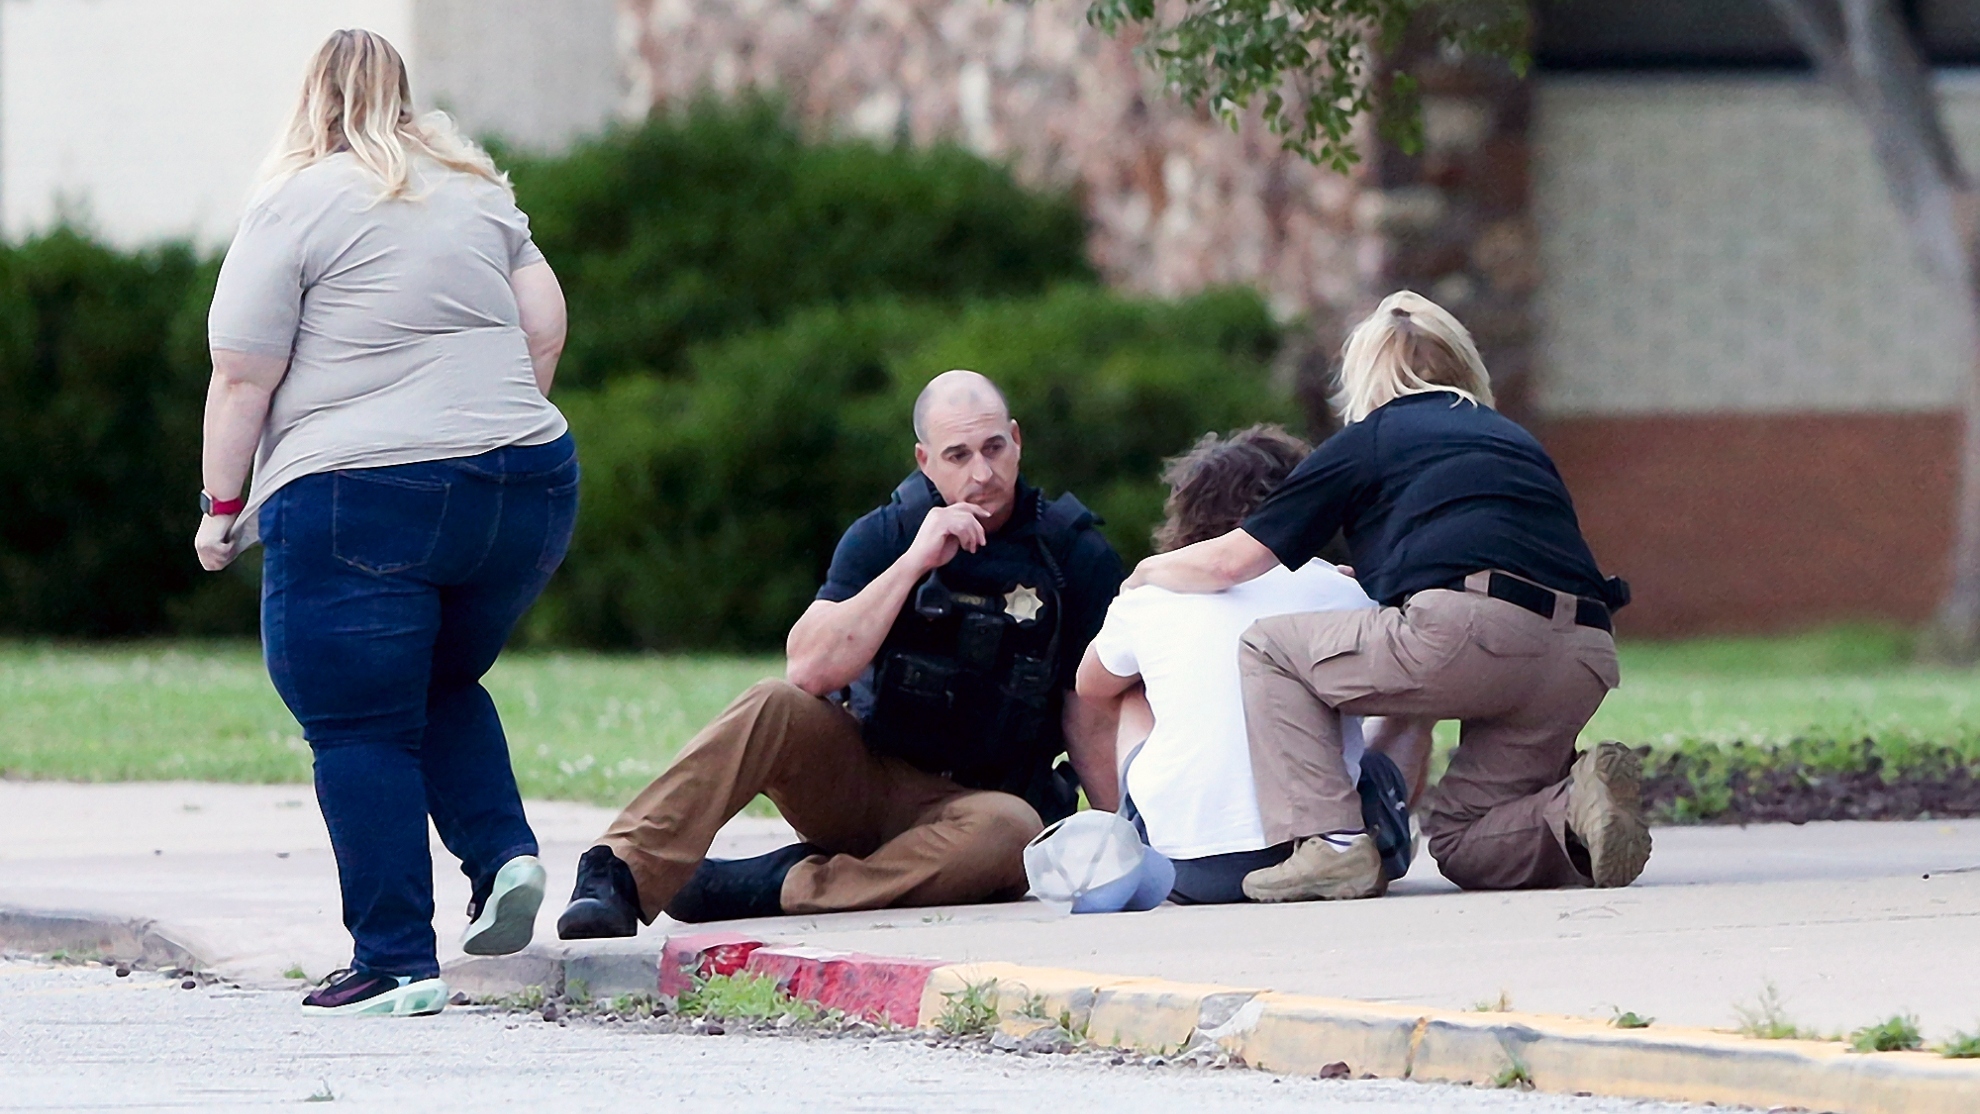 Tulsa mass shooting live updates Gunman enters hospital, kills 4 and